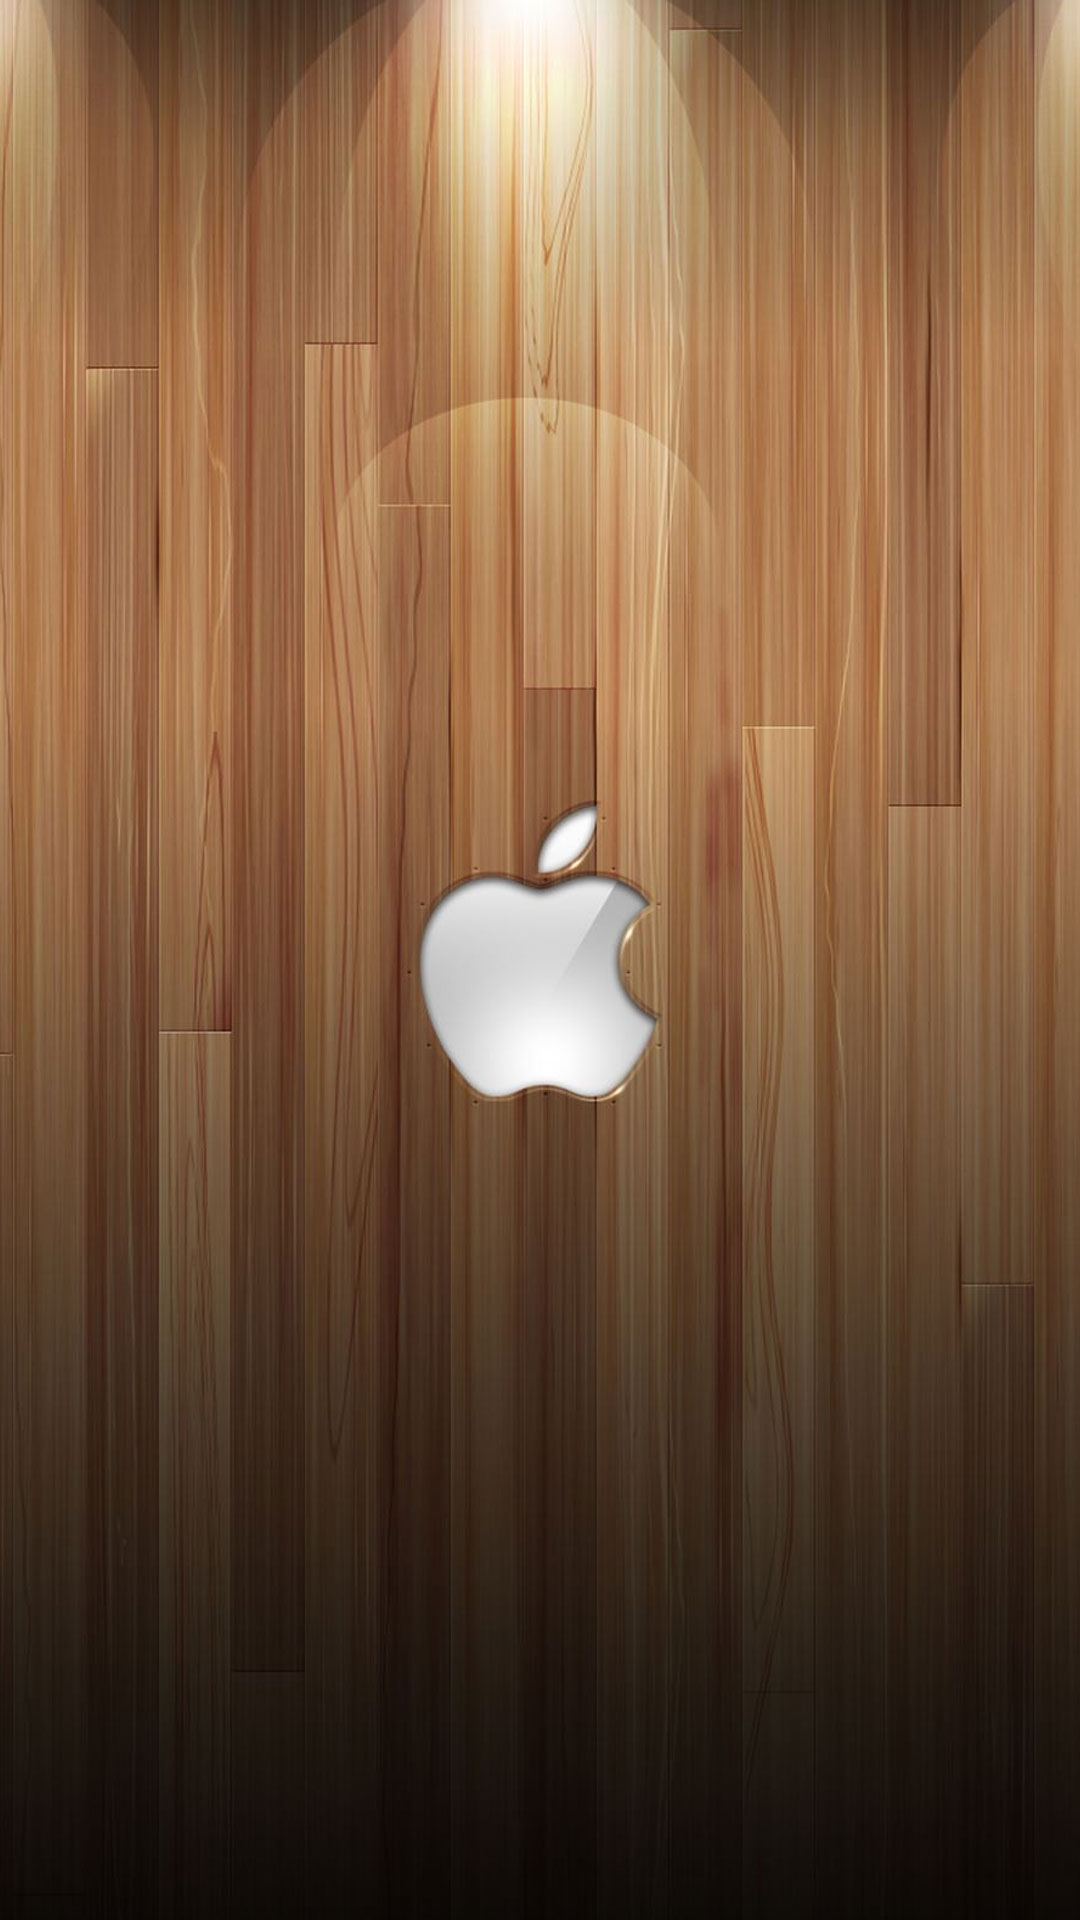 Apple iPhone Plus Wallpaper Retina Best Cool